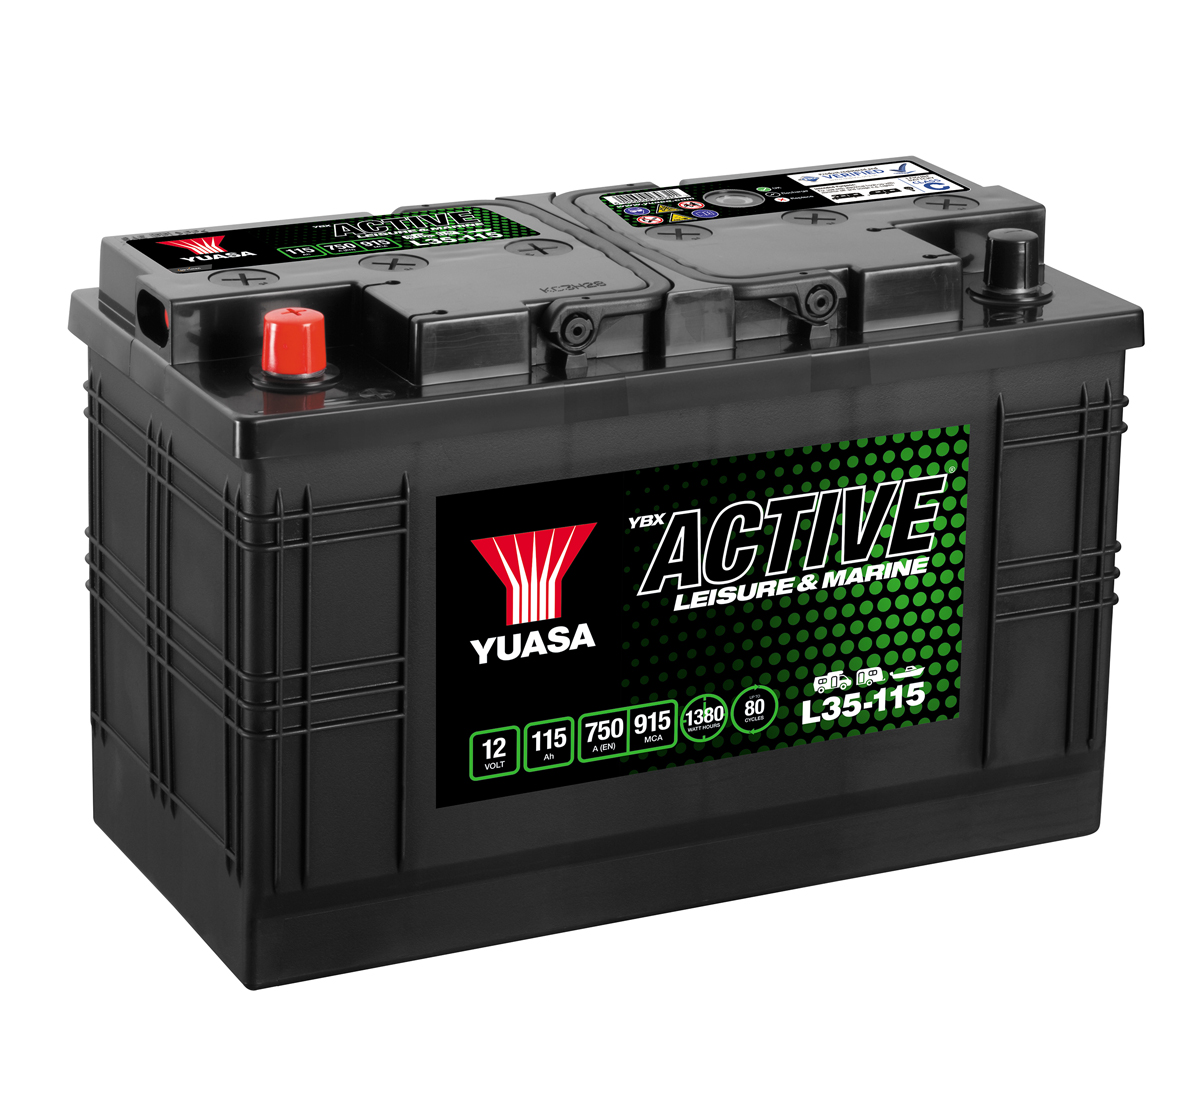 Yuasa YBX Active L35-115 Leisure Battery